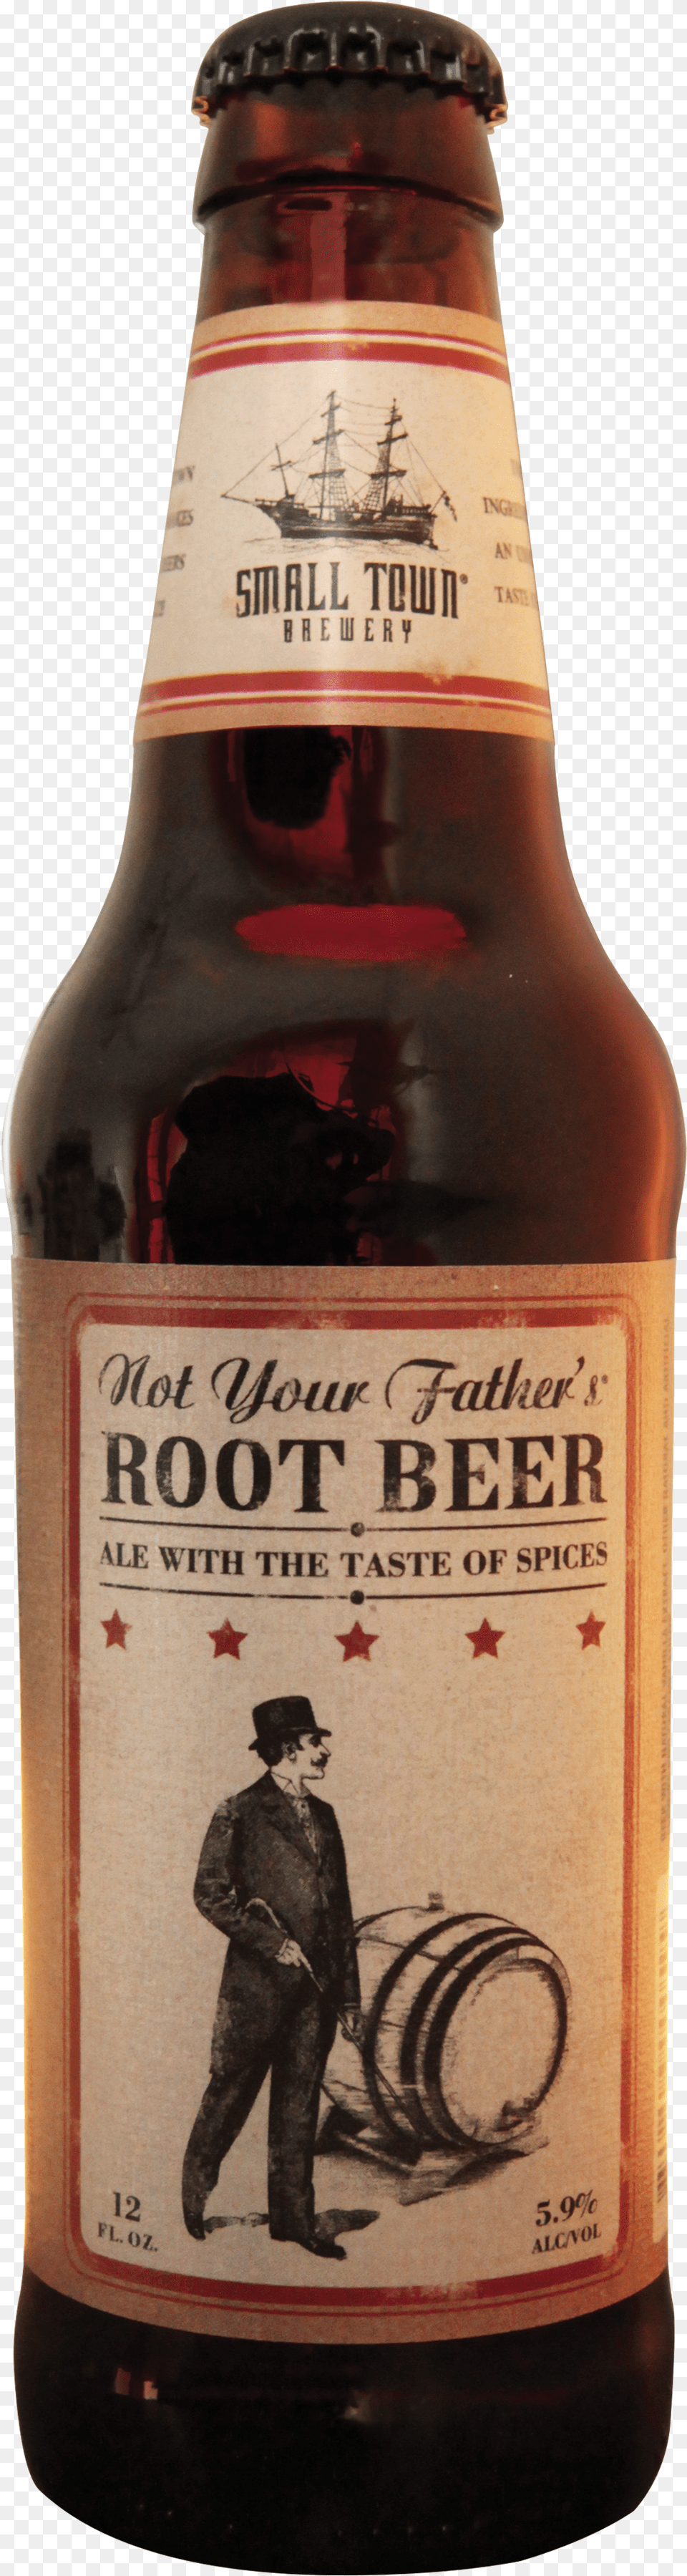 Root Beer Png Image